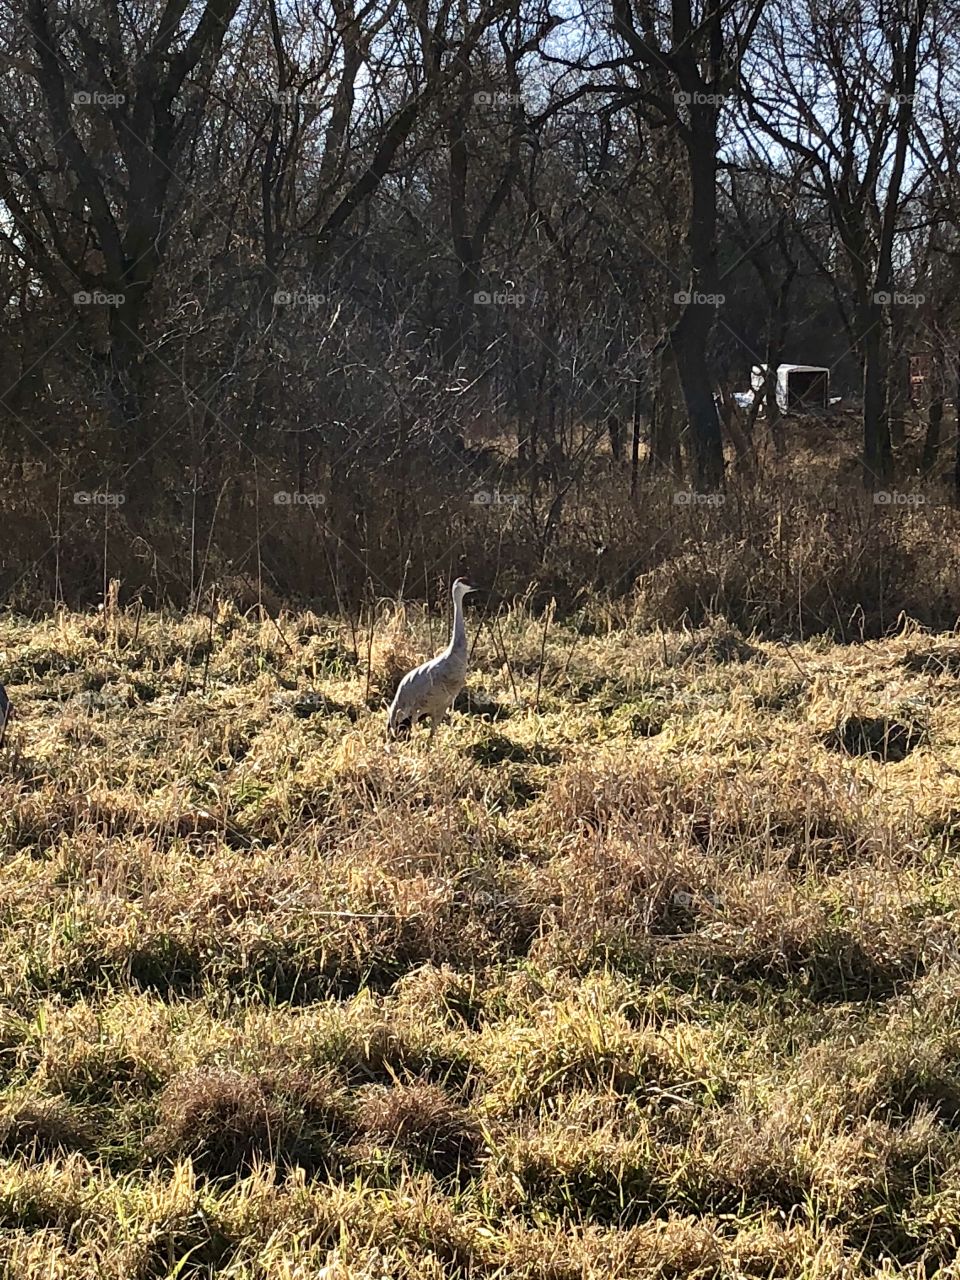 Sandhill crane in field 